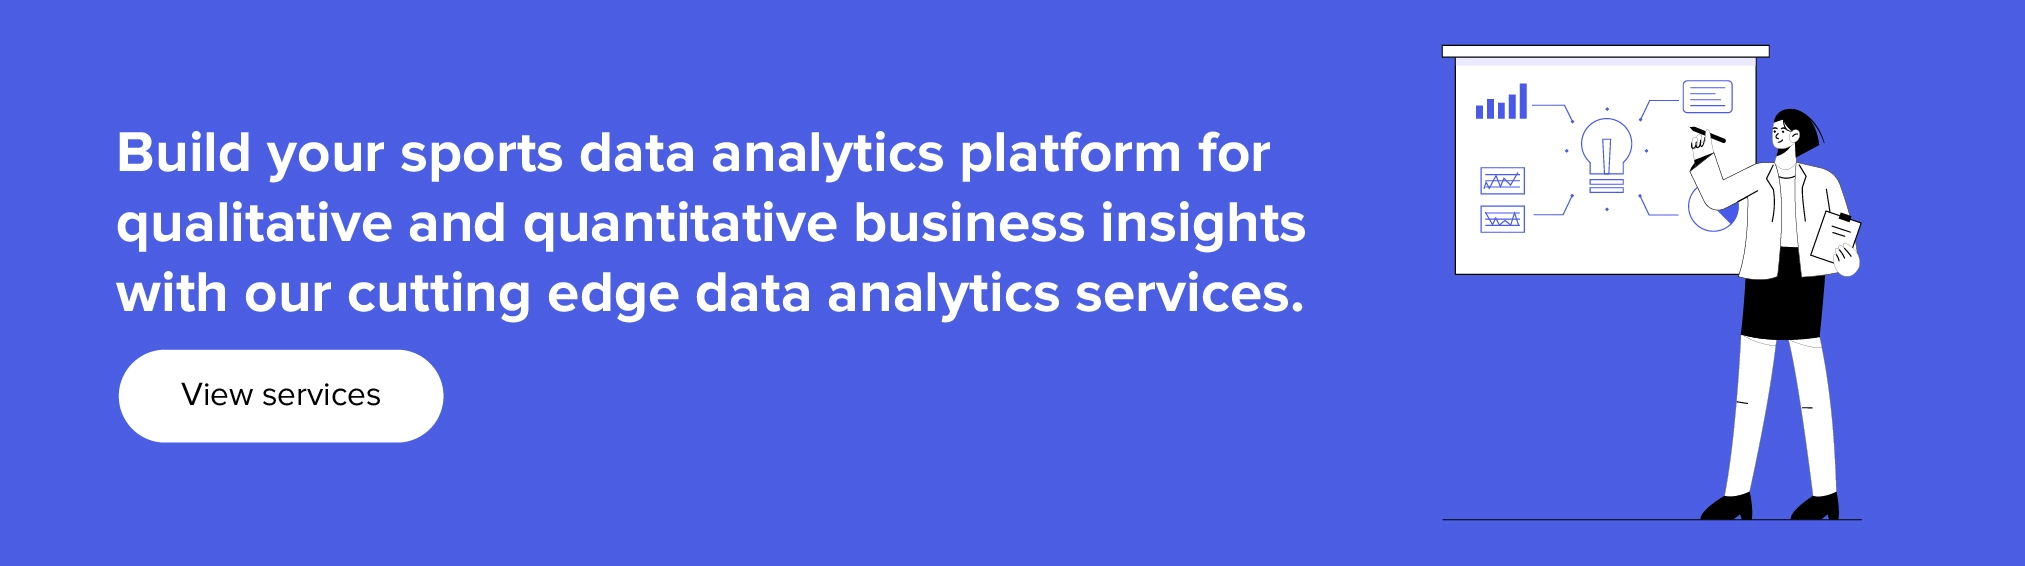 Build your sports data analytics platform